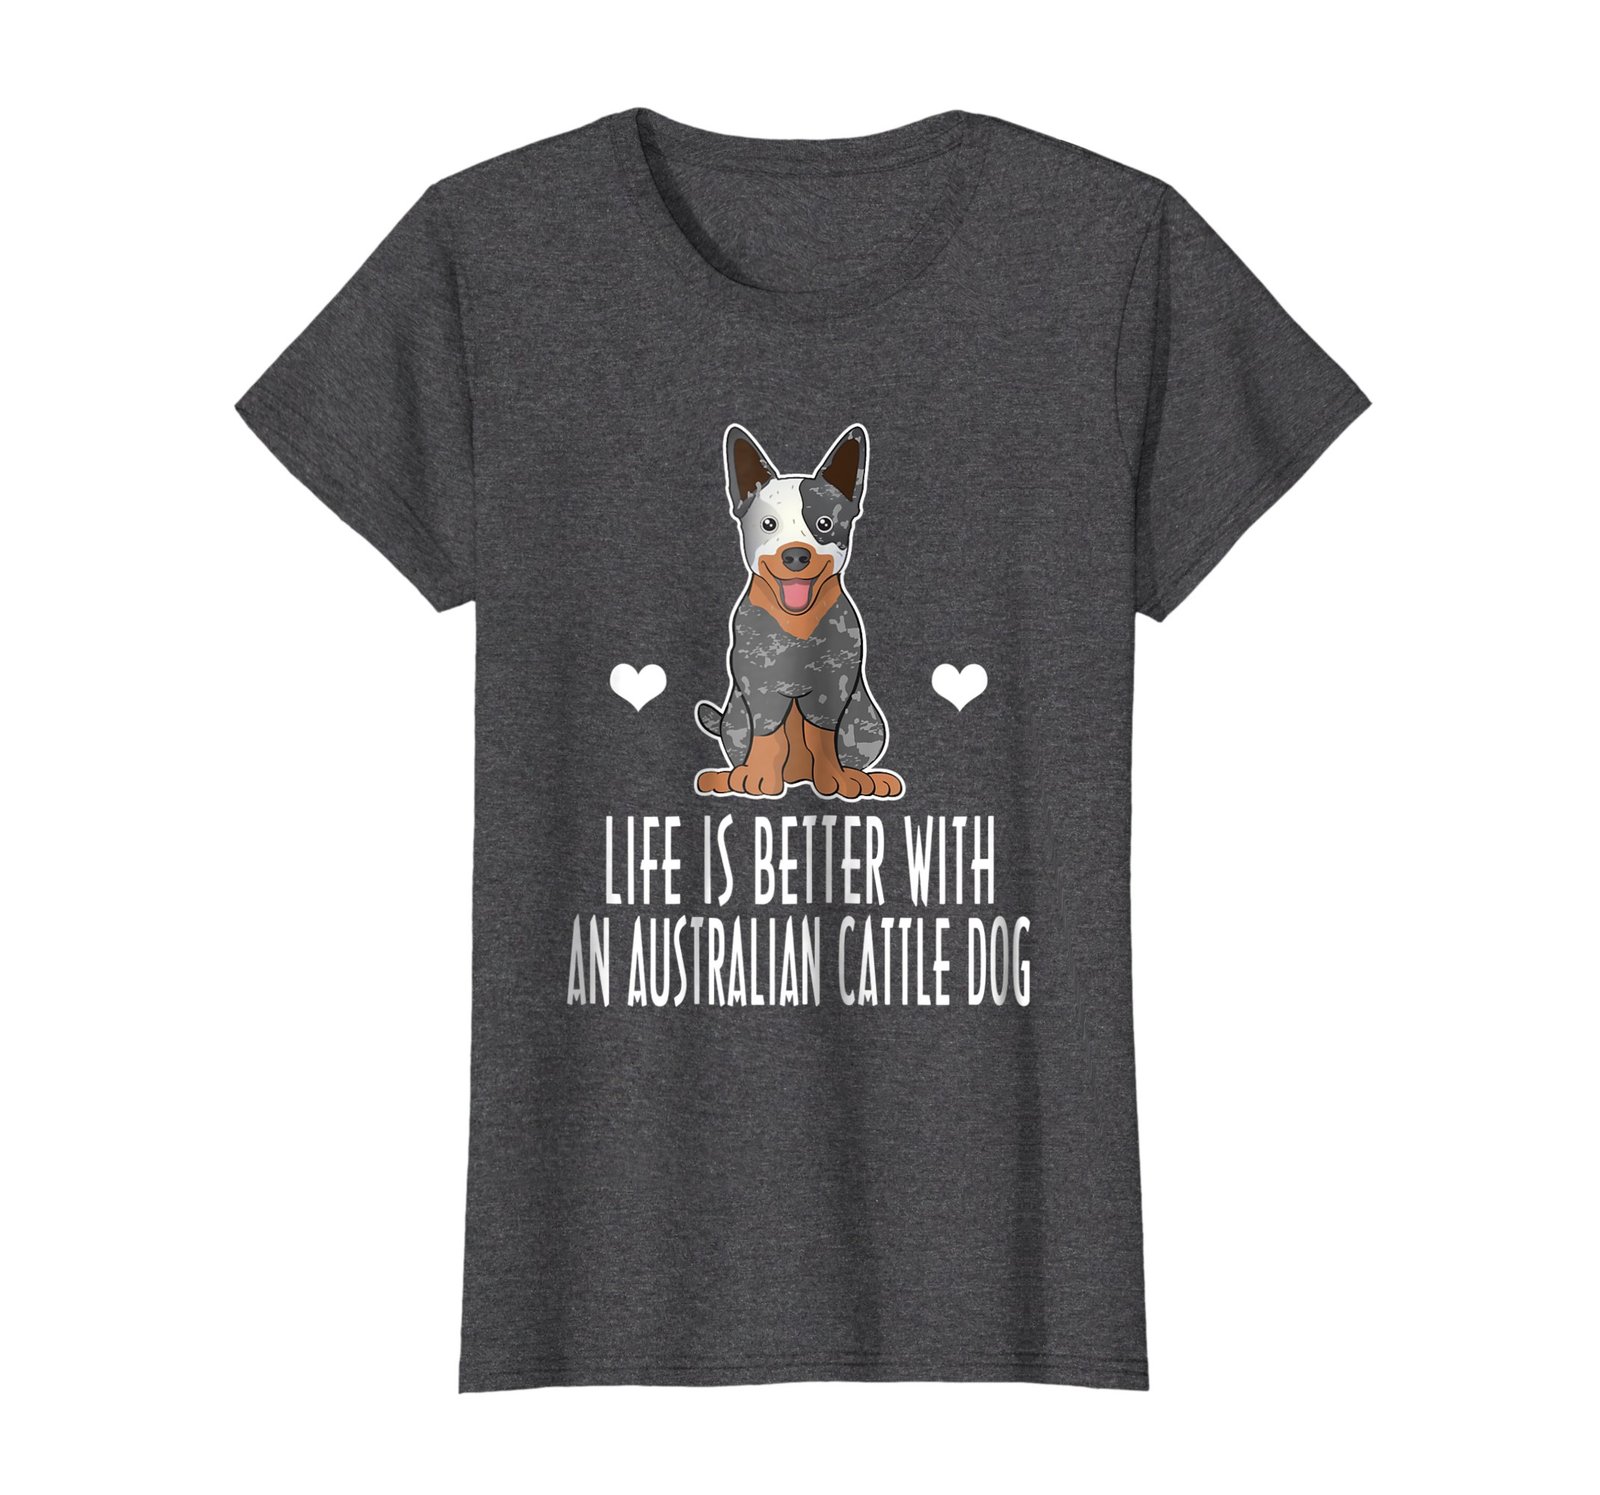 Life Is Better With An Australian Cattle Dog T-shirt - $19.99 - $20.99